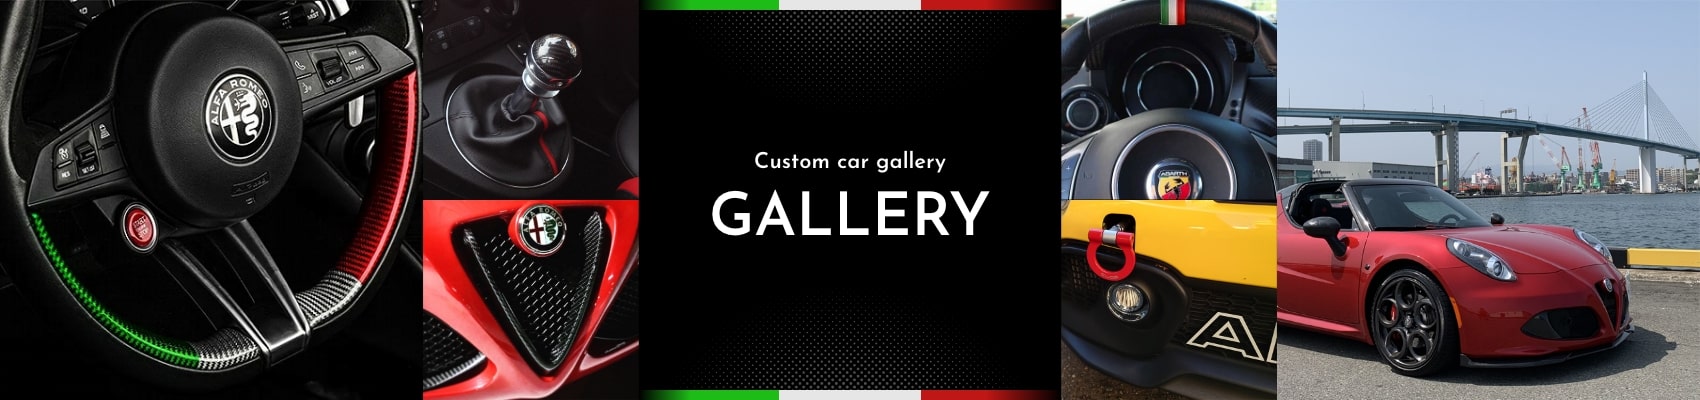 Custom car gallery